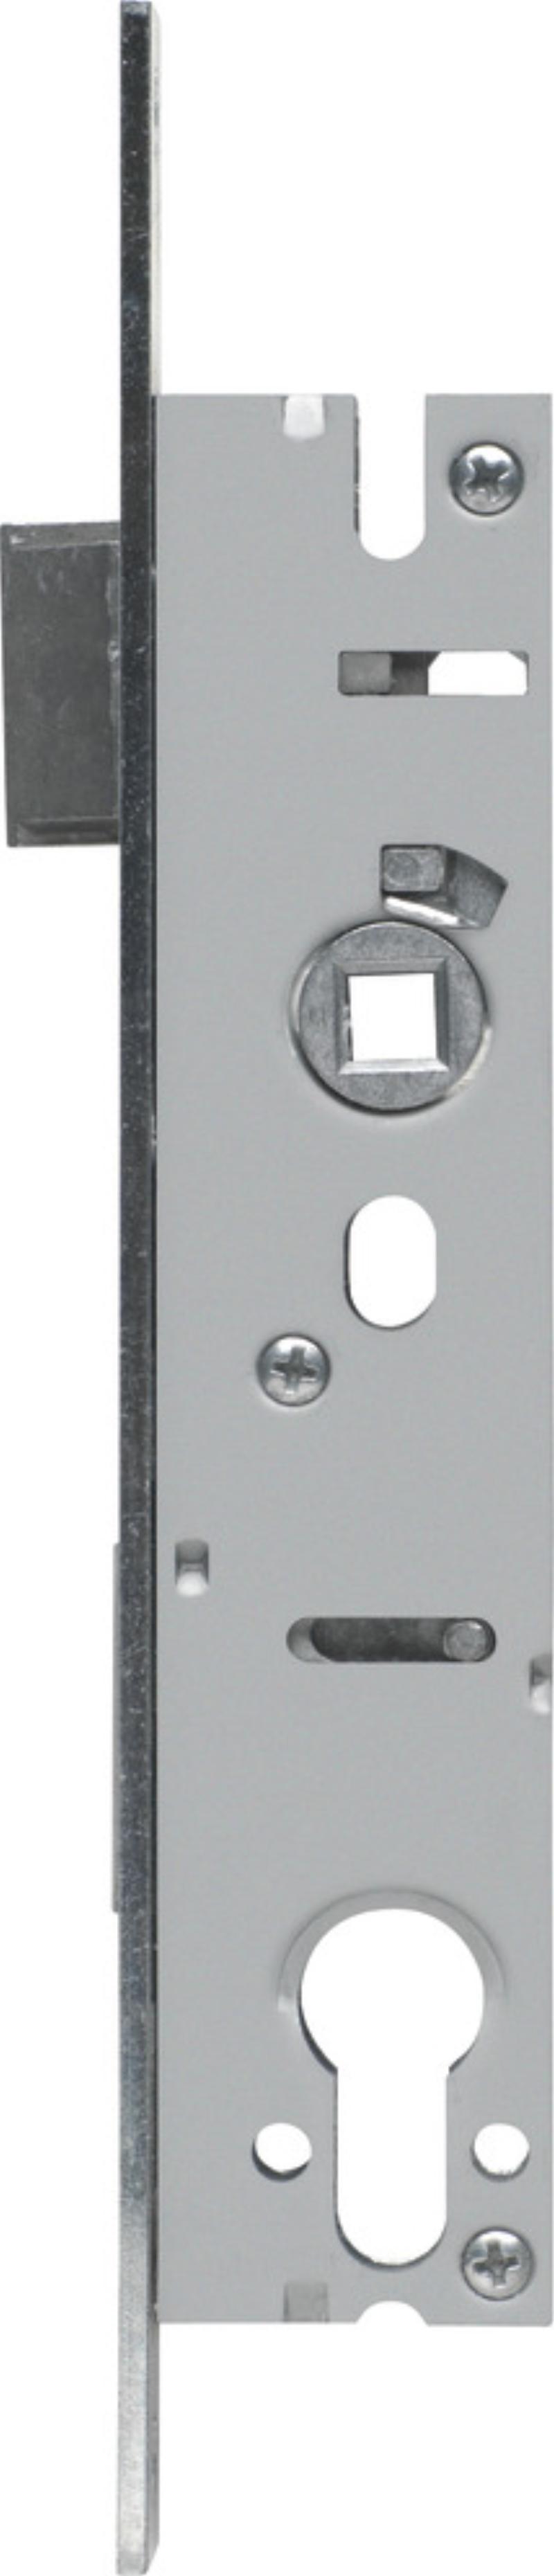 Abu's narrow profile locking box